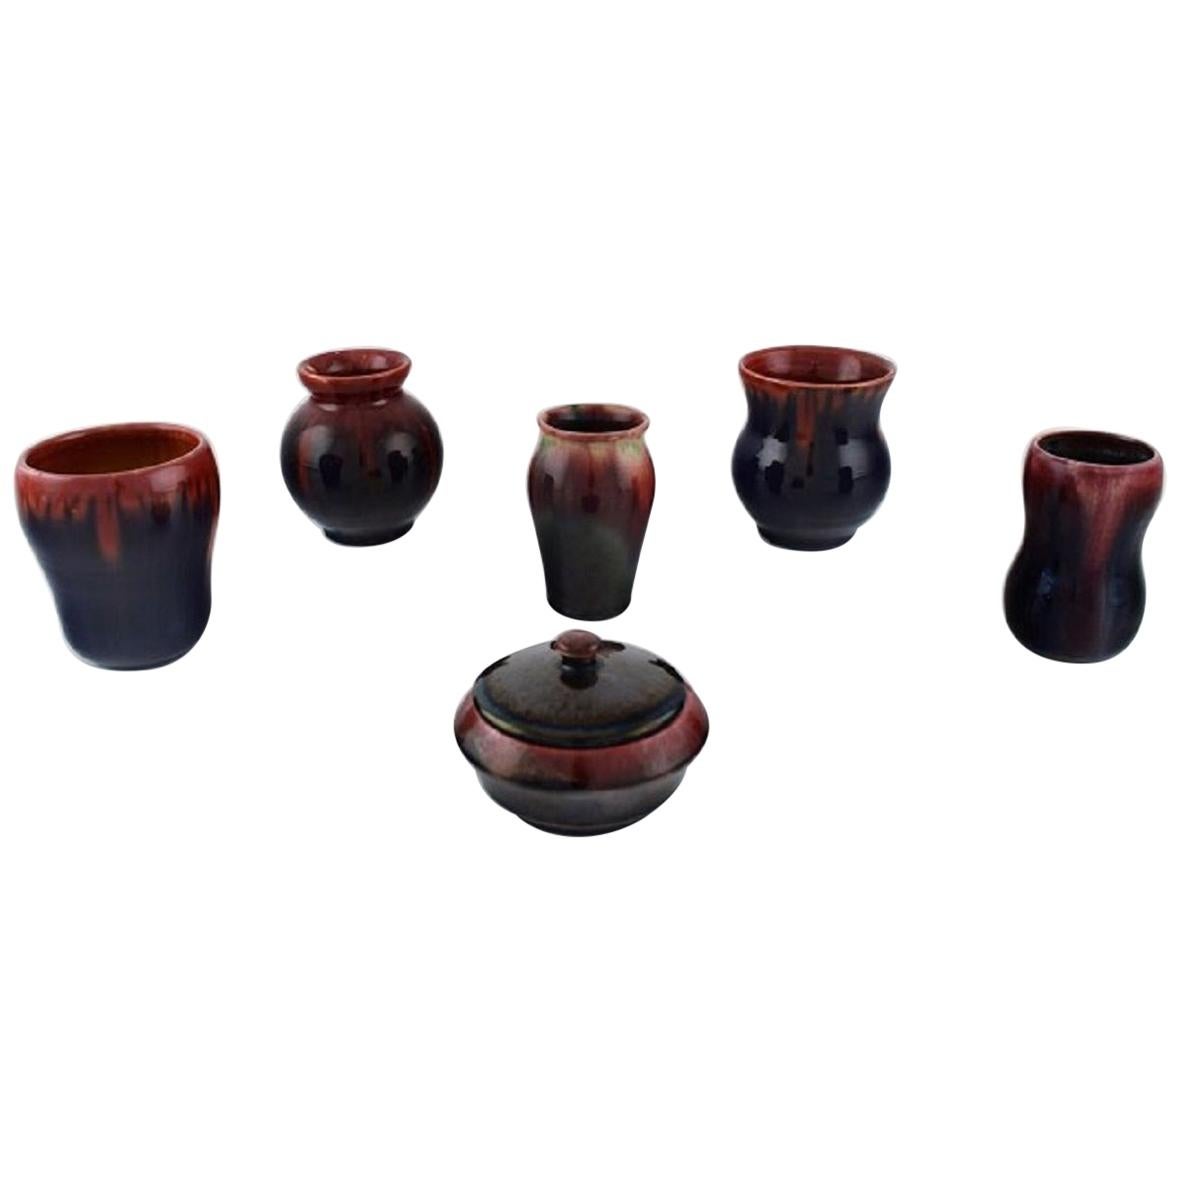 Michael Andersen, Bornholm, Five Vases and a Lidded Jar in Glazed Ceramics